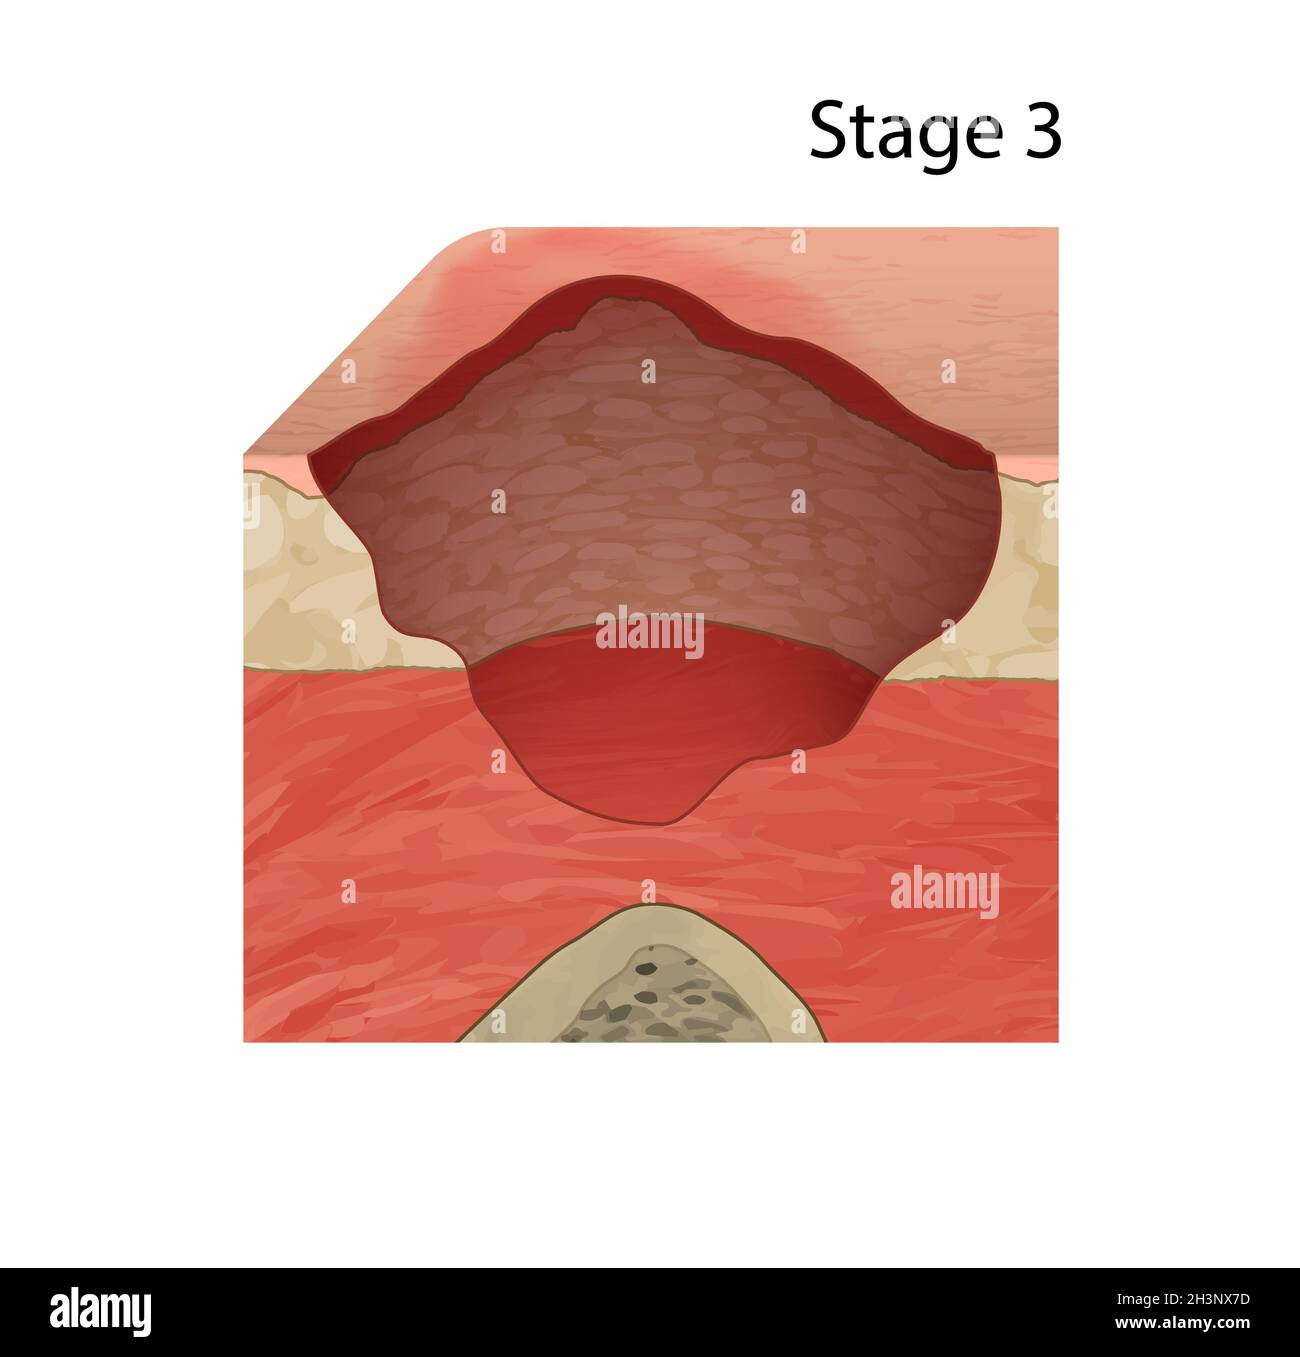 Stage 3 pressure sore, illustration Stock Photo